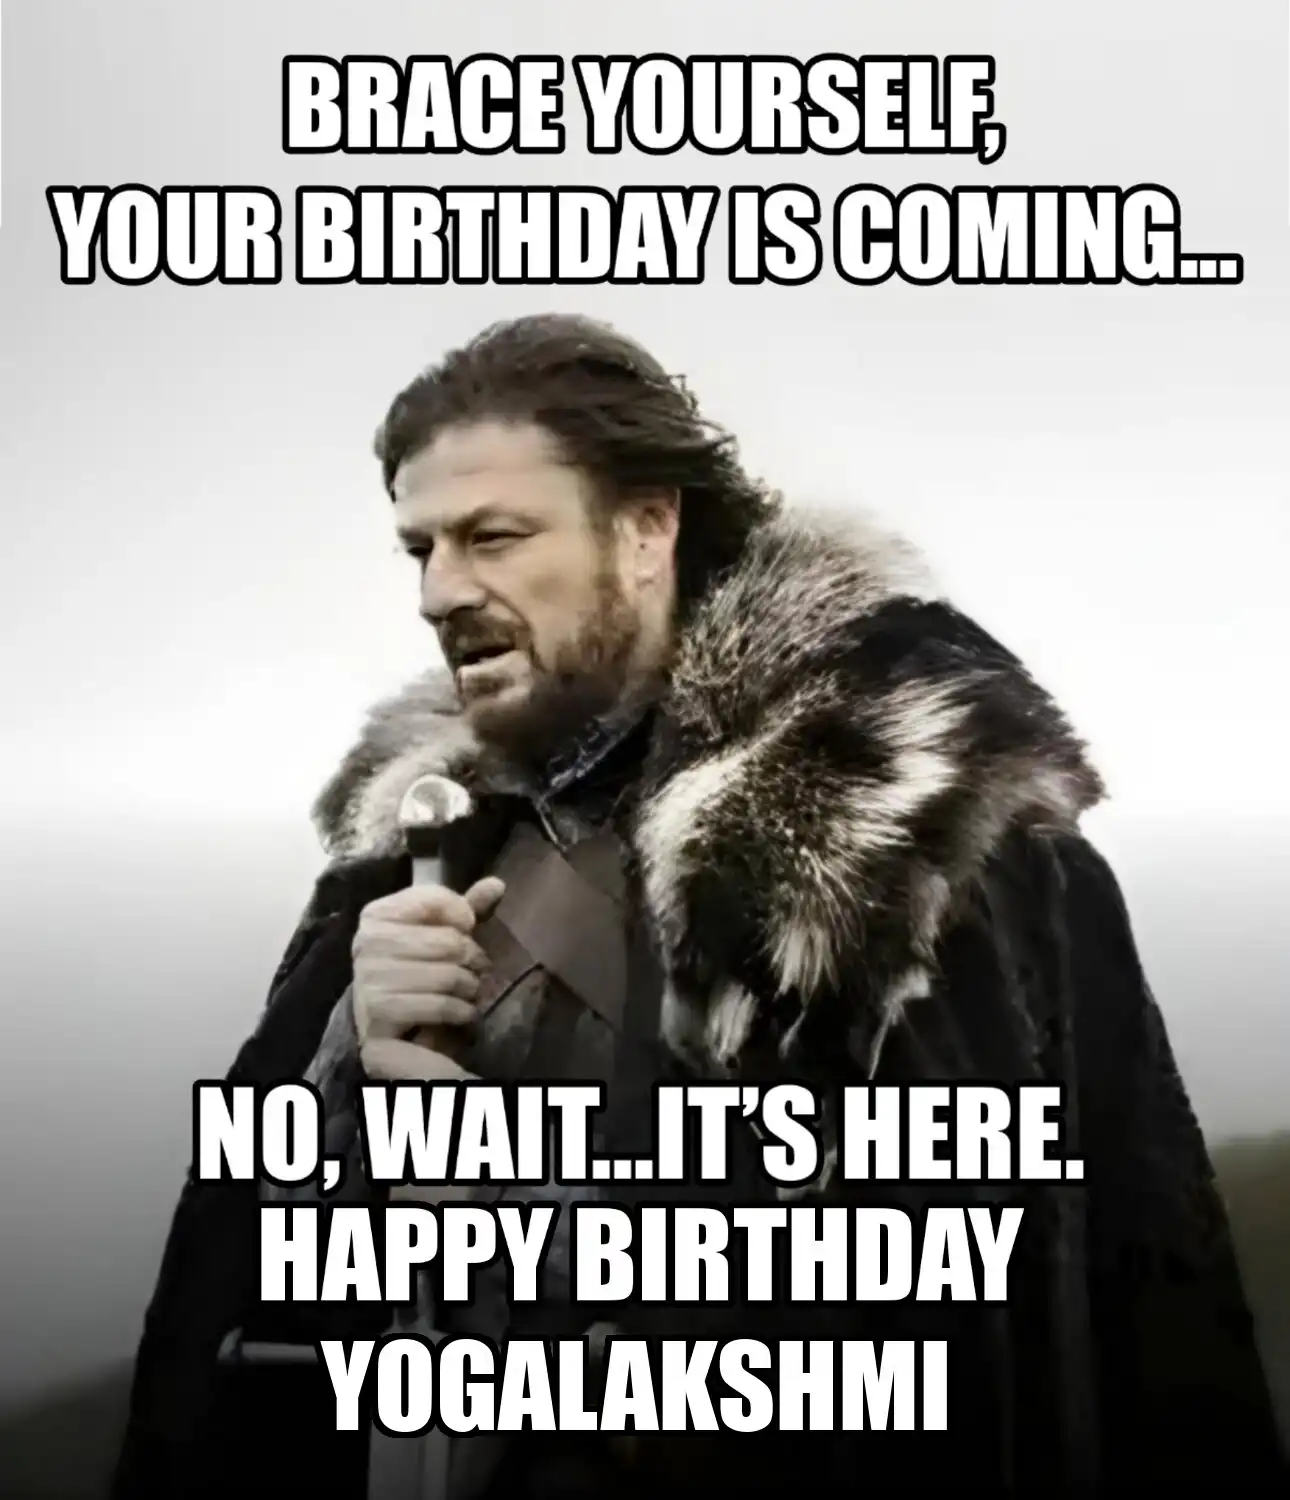 Happy Birthday Yogalakshmi Brace Yourself Your Birthday Is Coming Meme